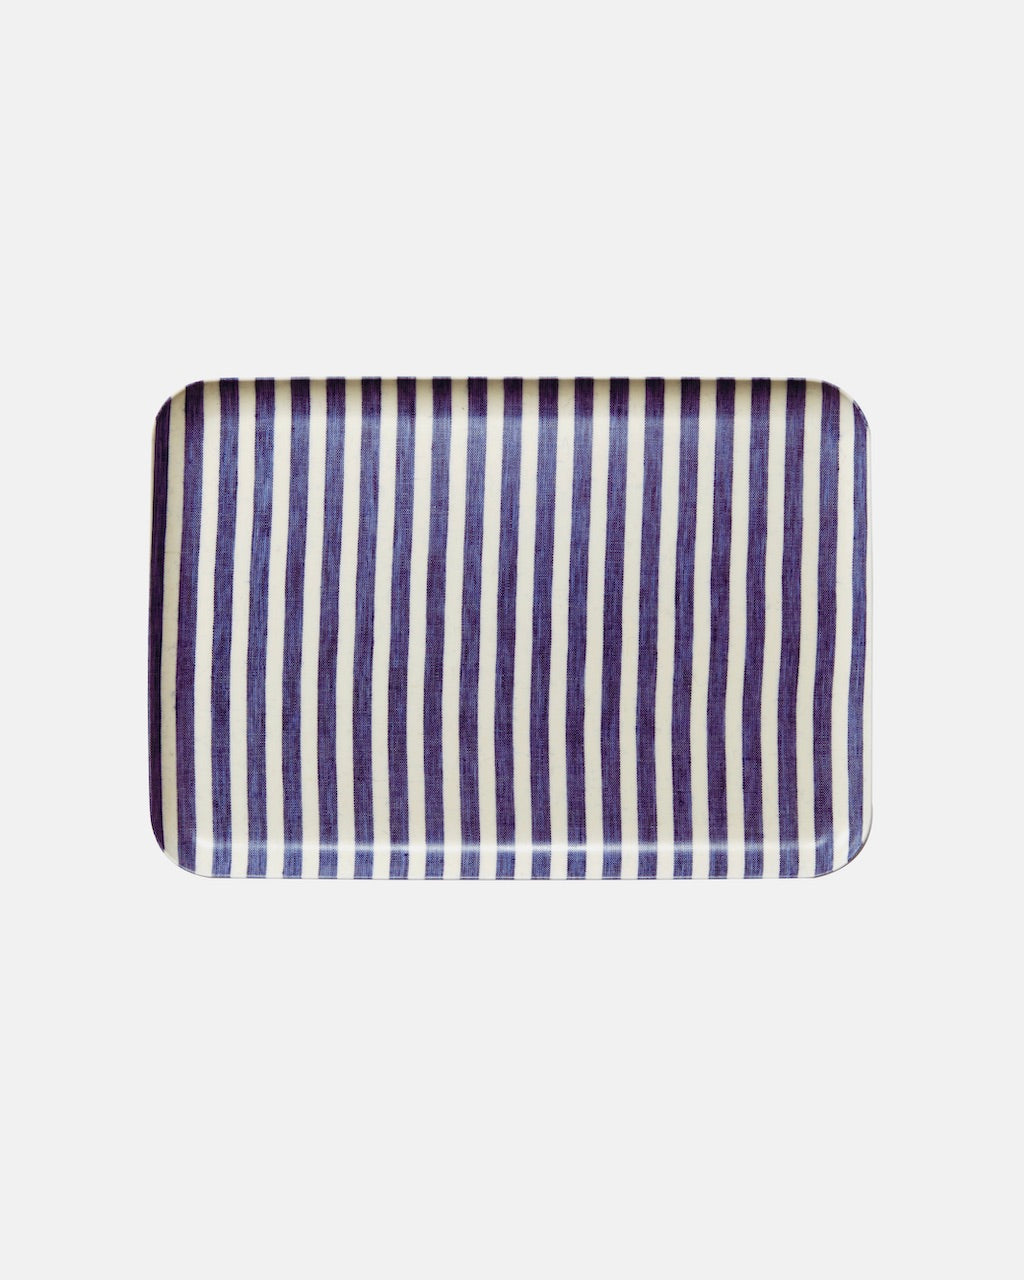 Linen Tray Large: Blue White Stripe